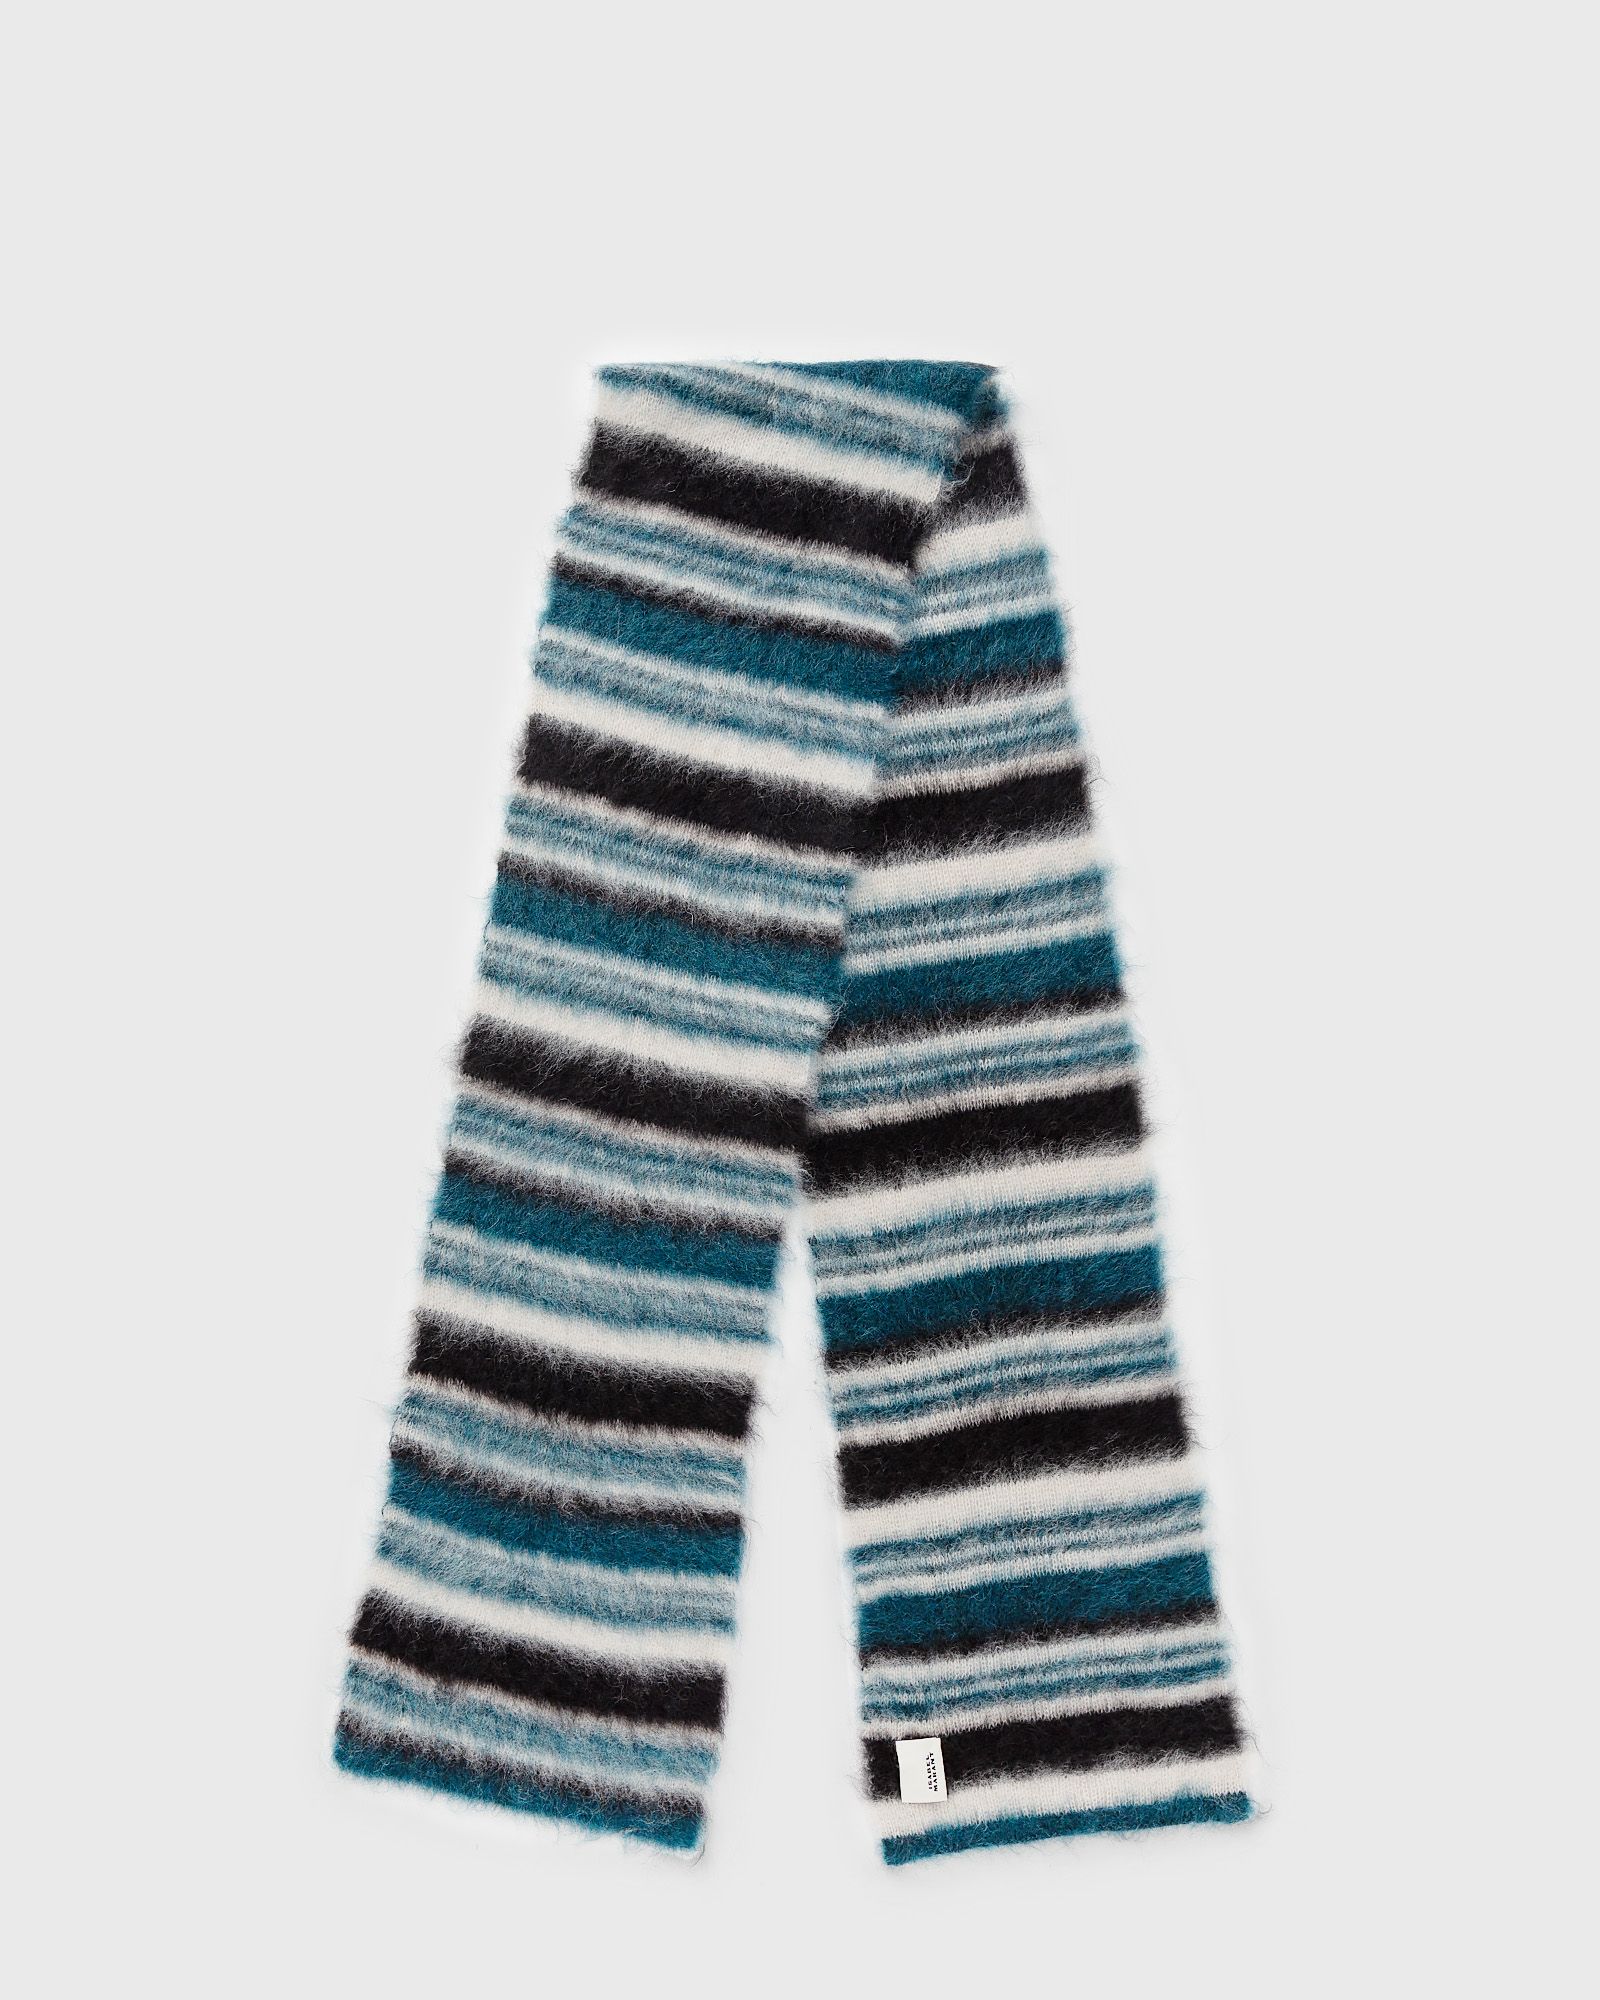 Marant - duke scarf men scarves blue|white in größe:one size